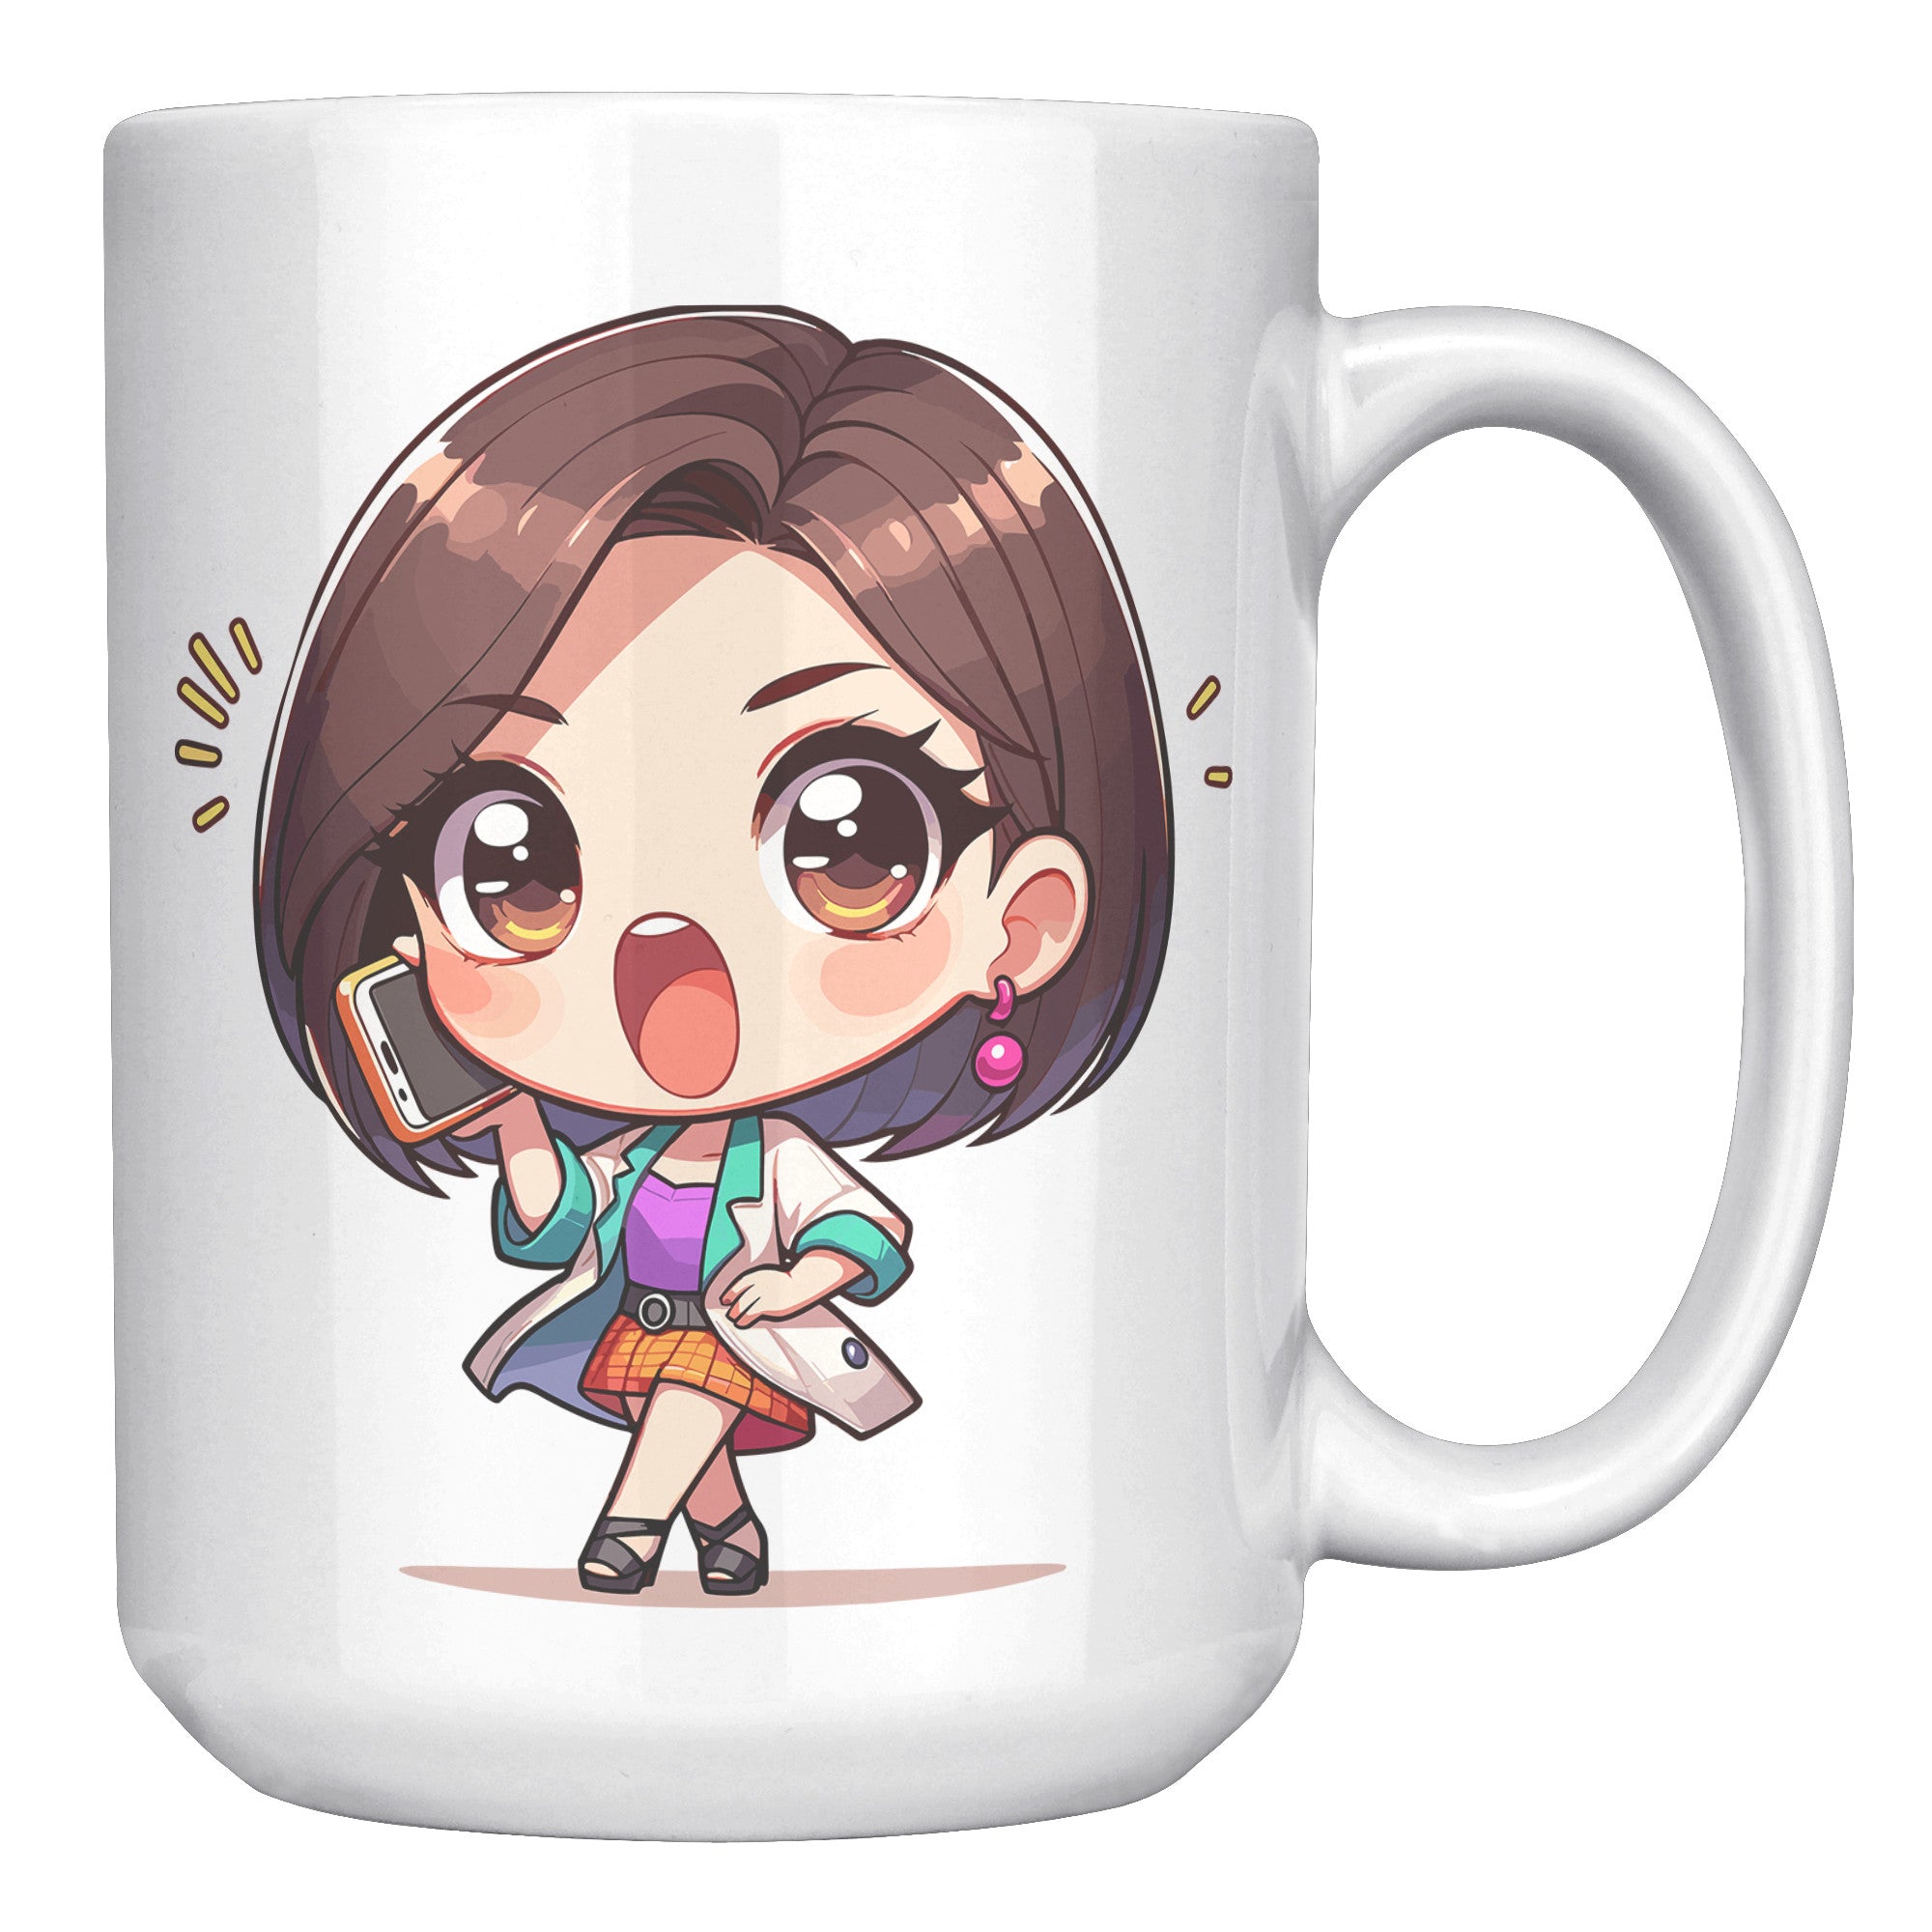 "Marites Gossip Queen Coffee Mug - Cute Cartoon 'Ano Ang Latest?' Cup - Perfect Chismosa Gift - Filipino Slang Tea Mug" - NNN1